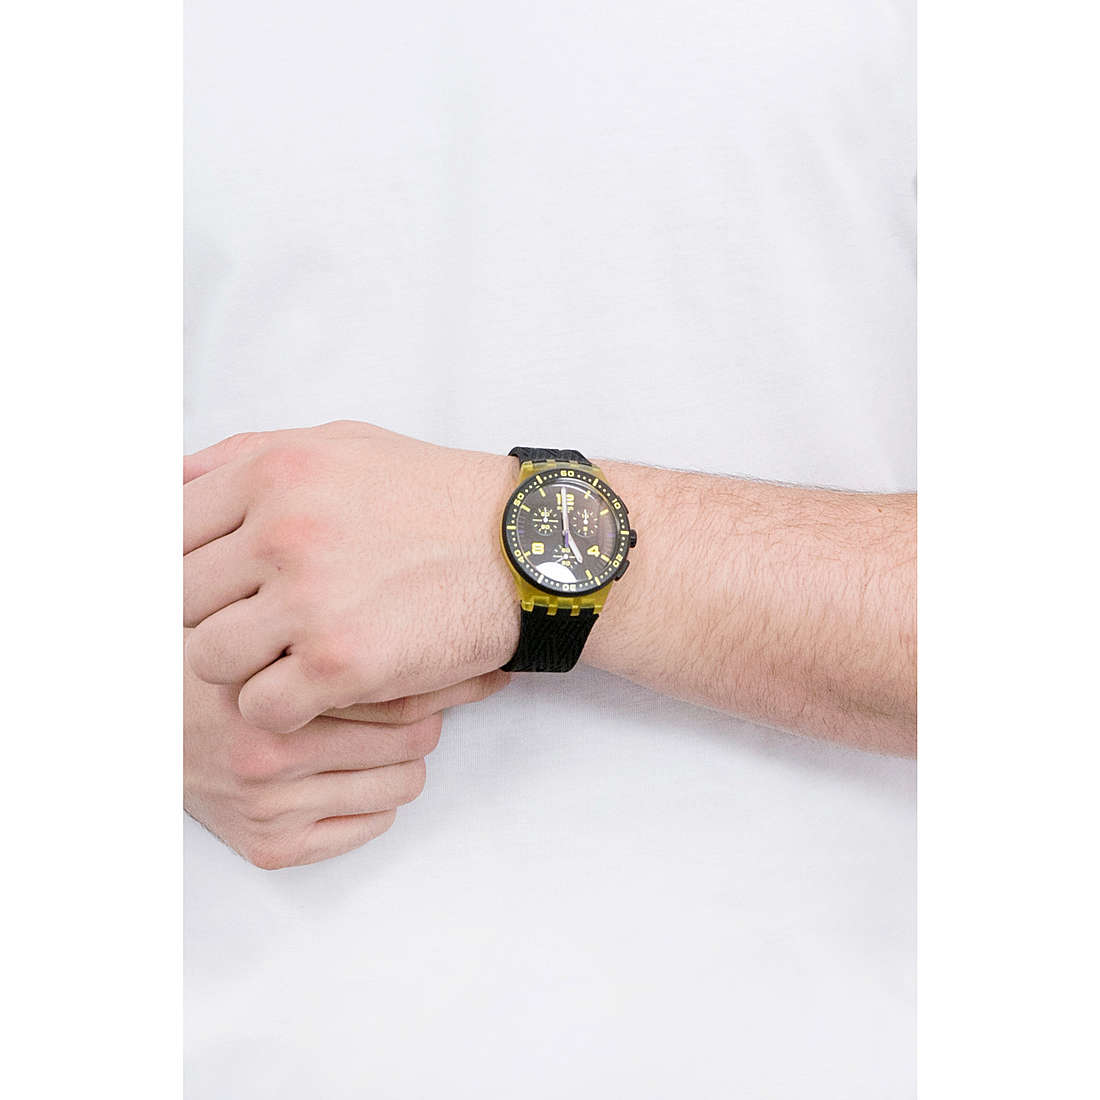 Swatch cronografi Essentials uomo SUSJ403 indosso